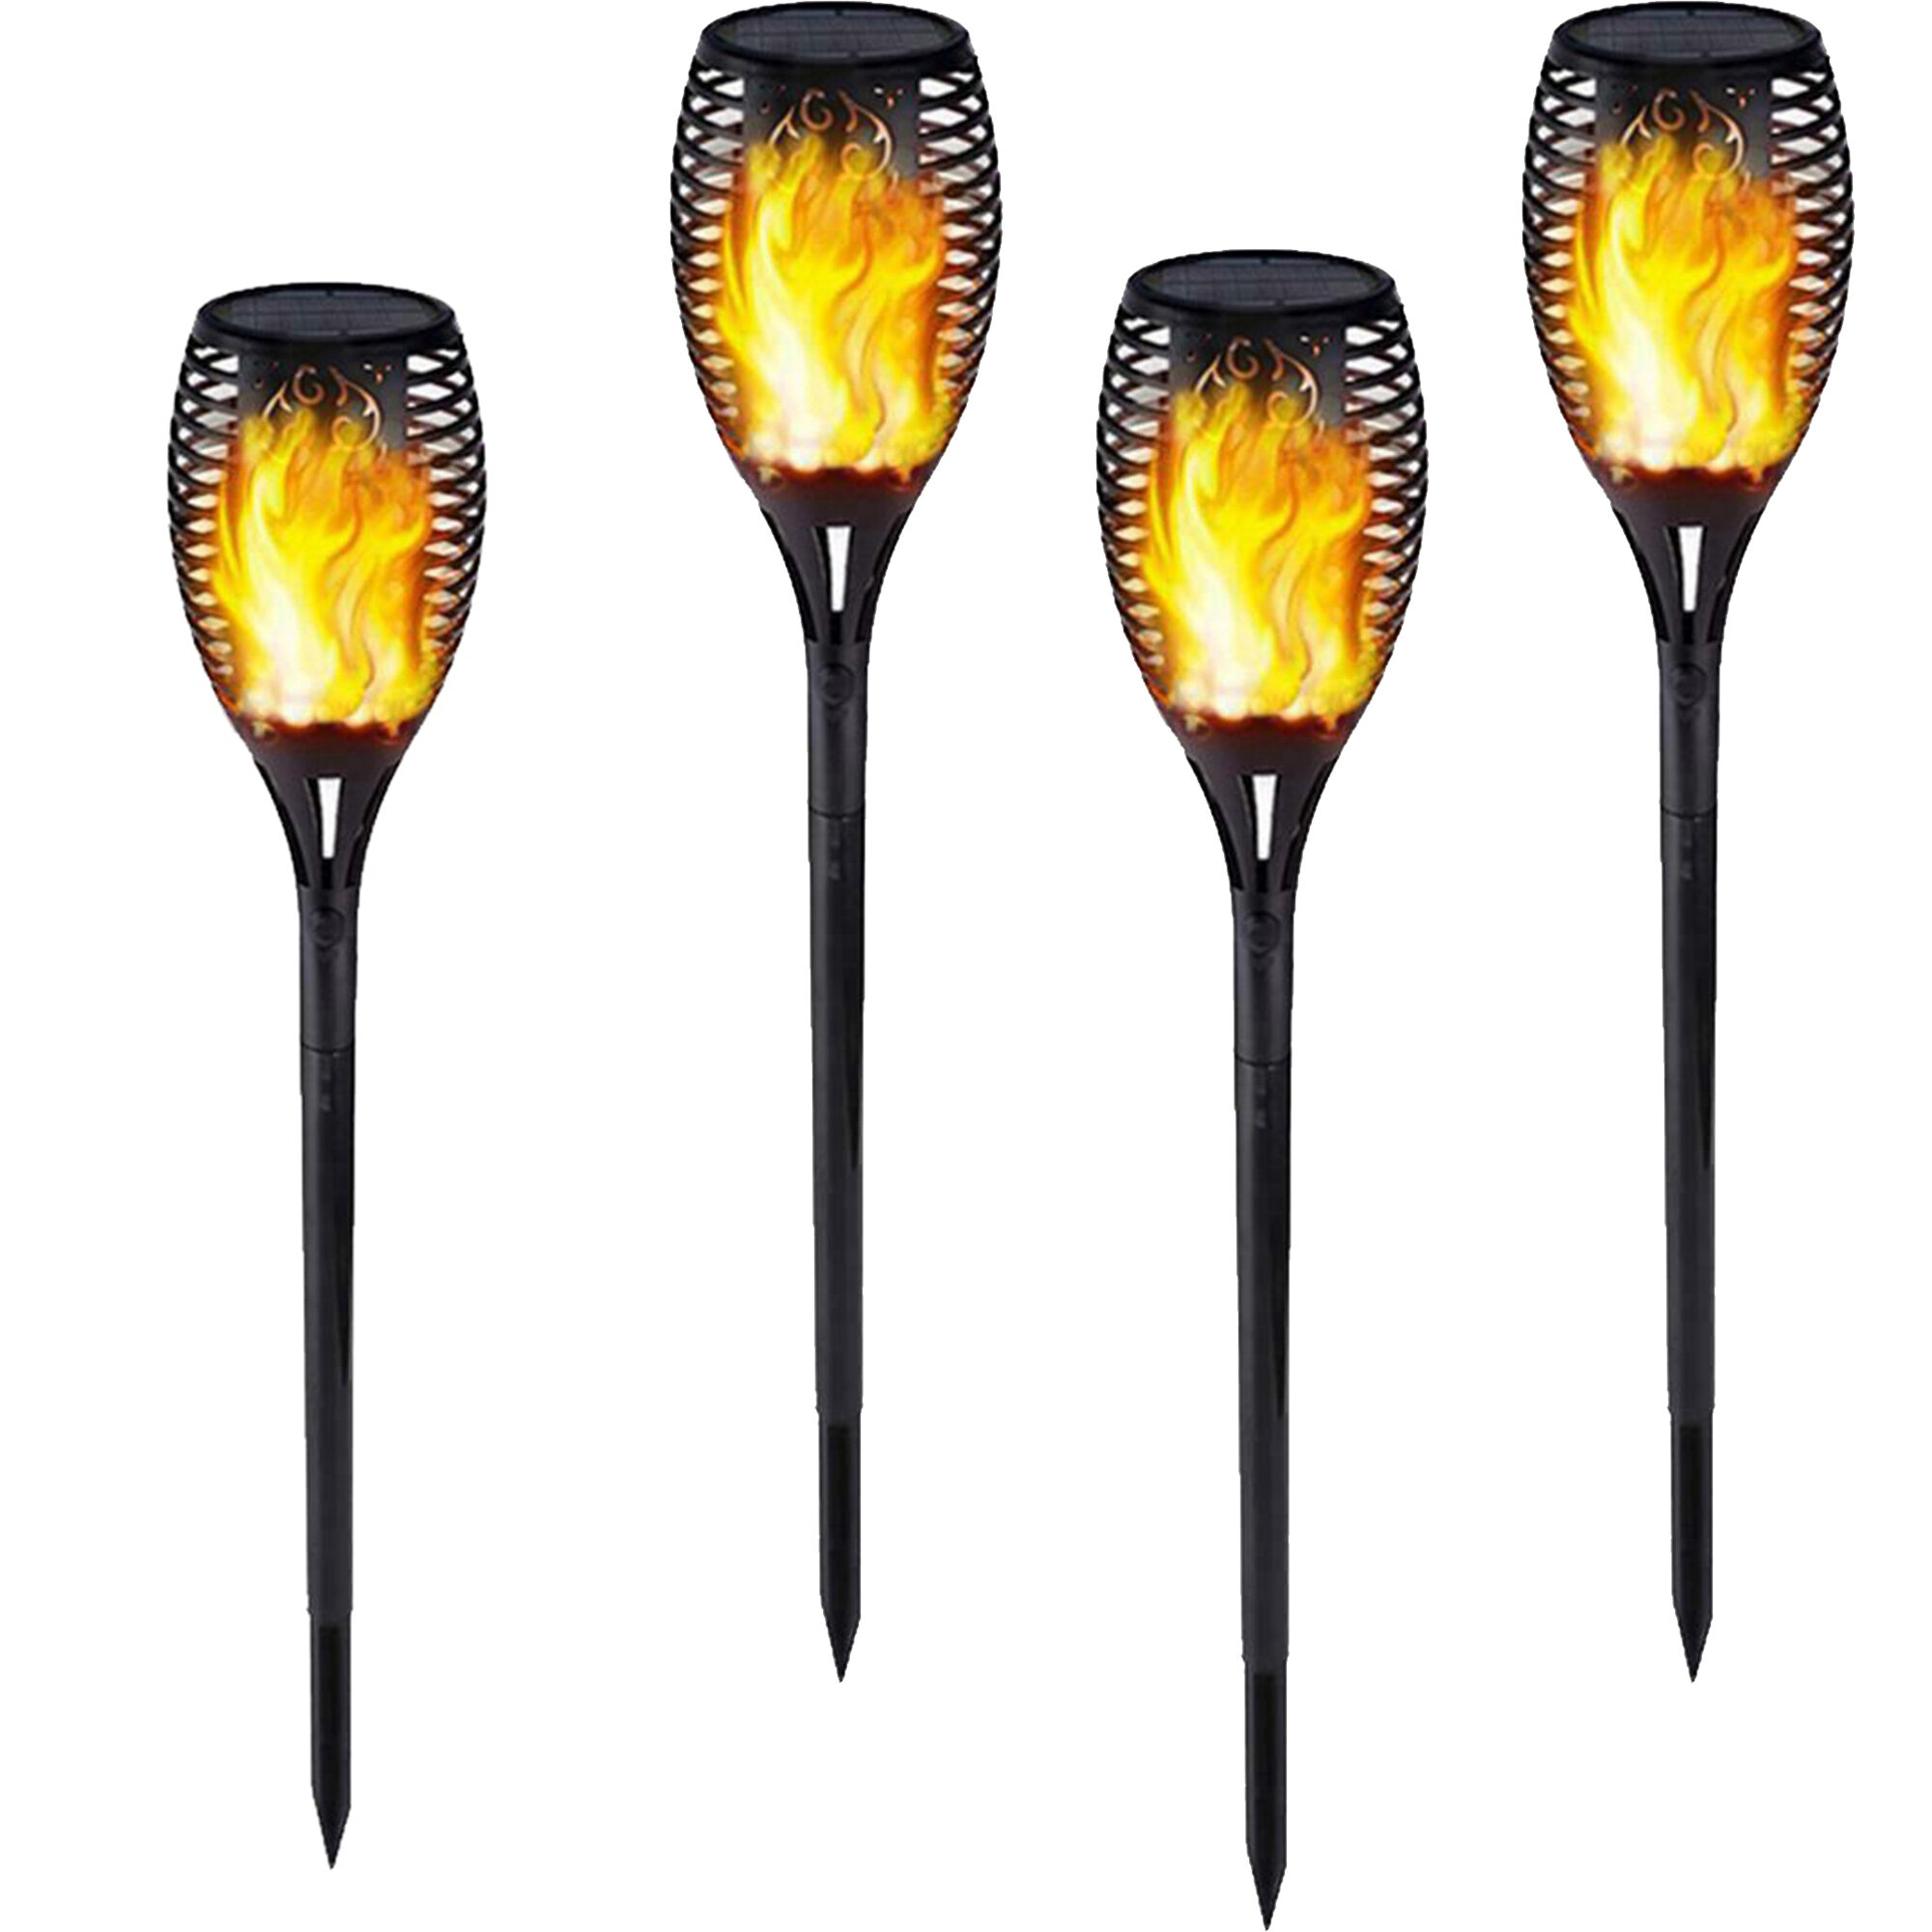 1-8 Pack 12LED Waterproof Solar Torch Light Dancing Flickering Flame Garden Lamp 